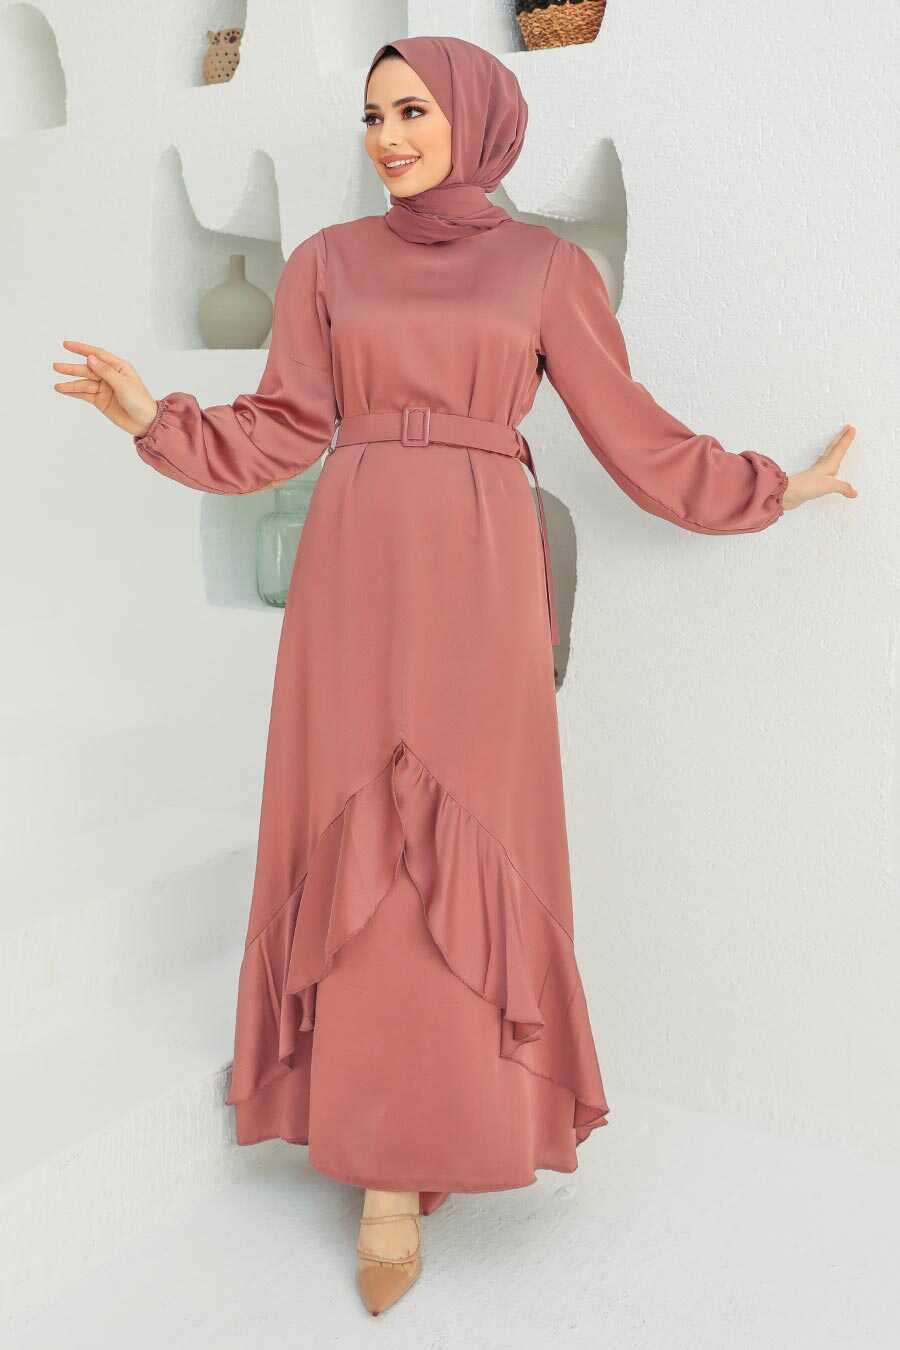 Neva Style - Elegant Dusty Rose Muslim Fashion Evening Dress 4566GK